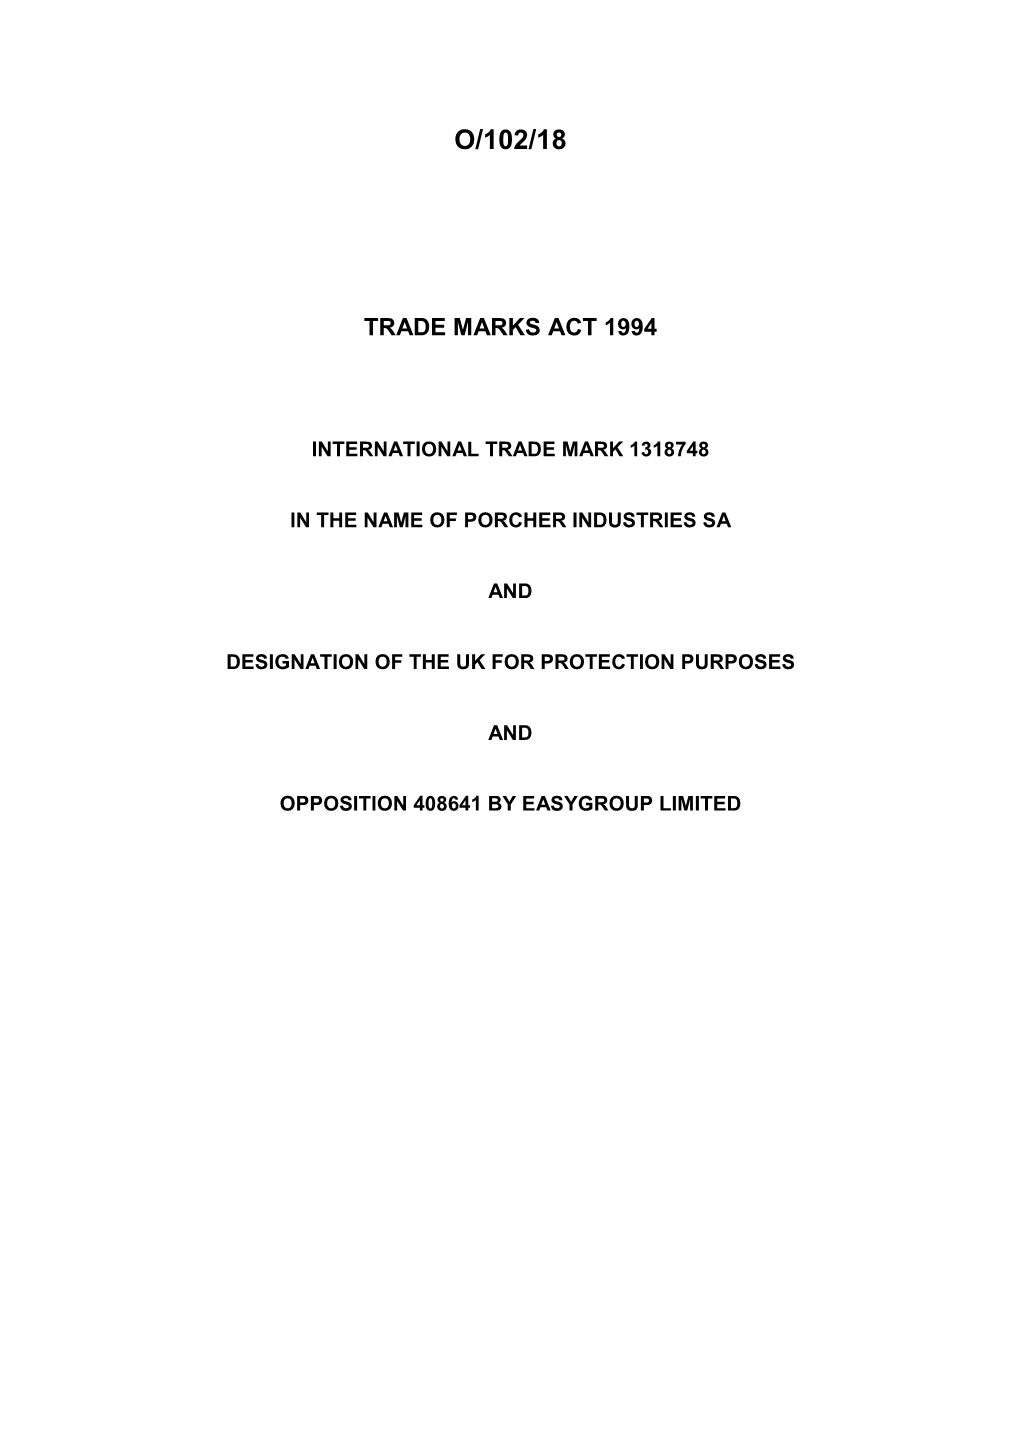 Trade Mark Inter Partes Decision 0/102/18